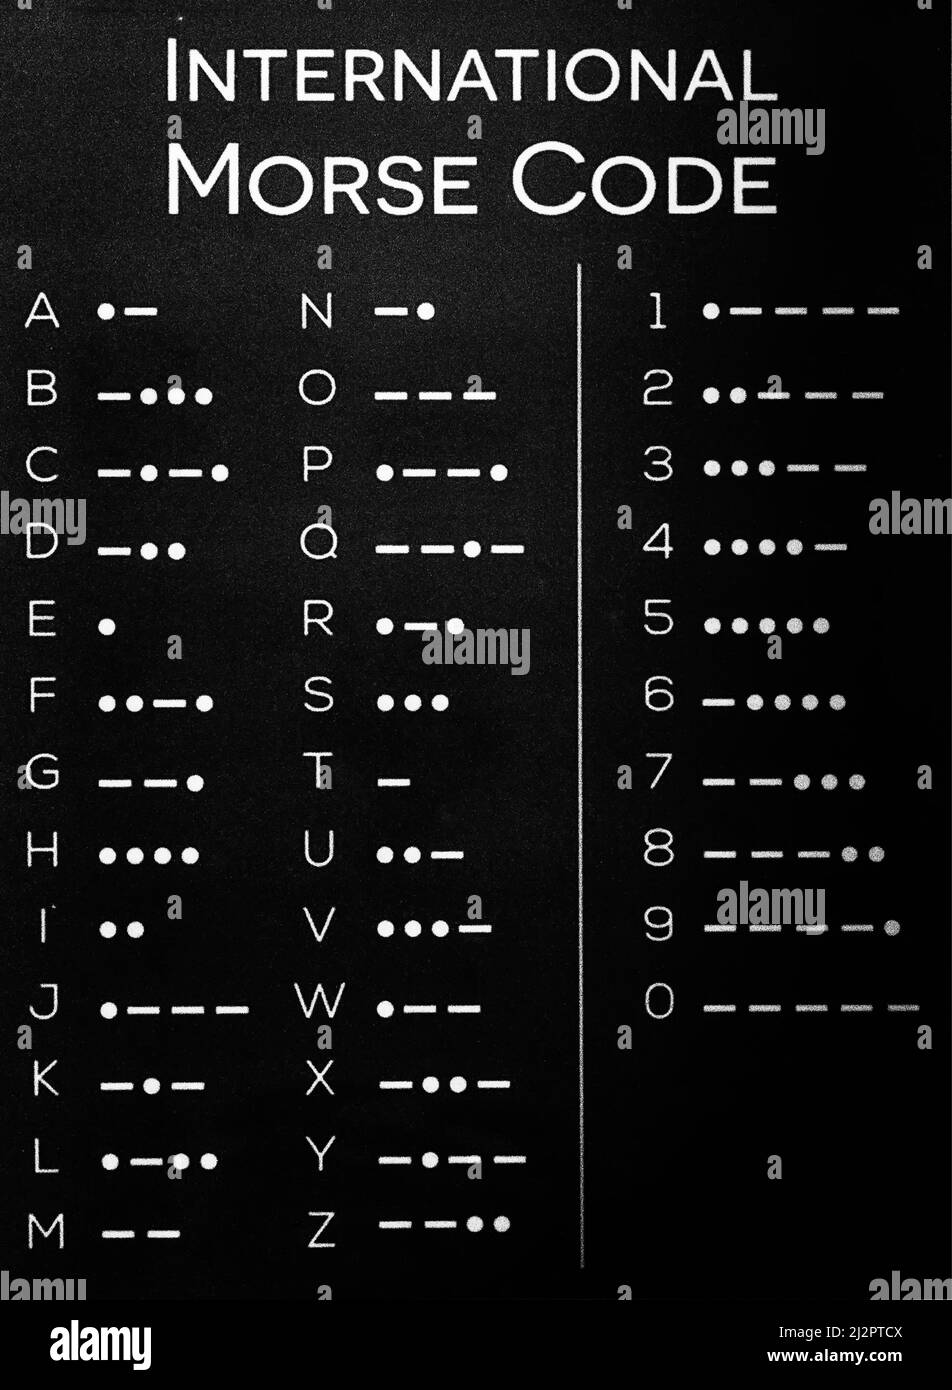 Morse code table -Fotos und -Bildmaterial in hoher Auflösung – Alamy